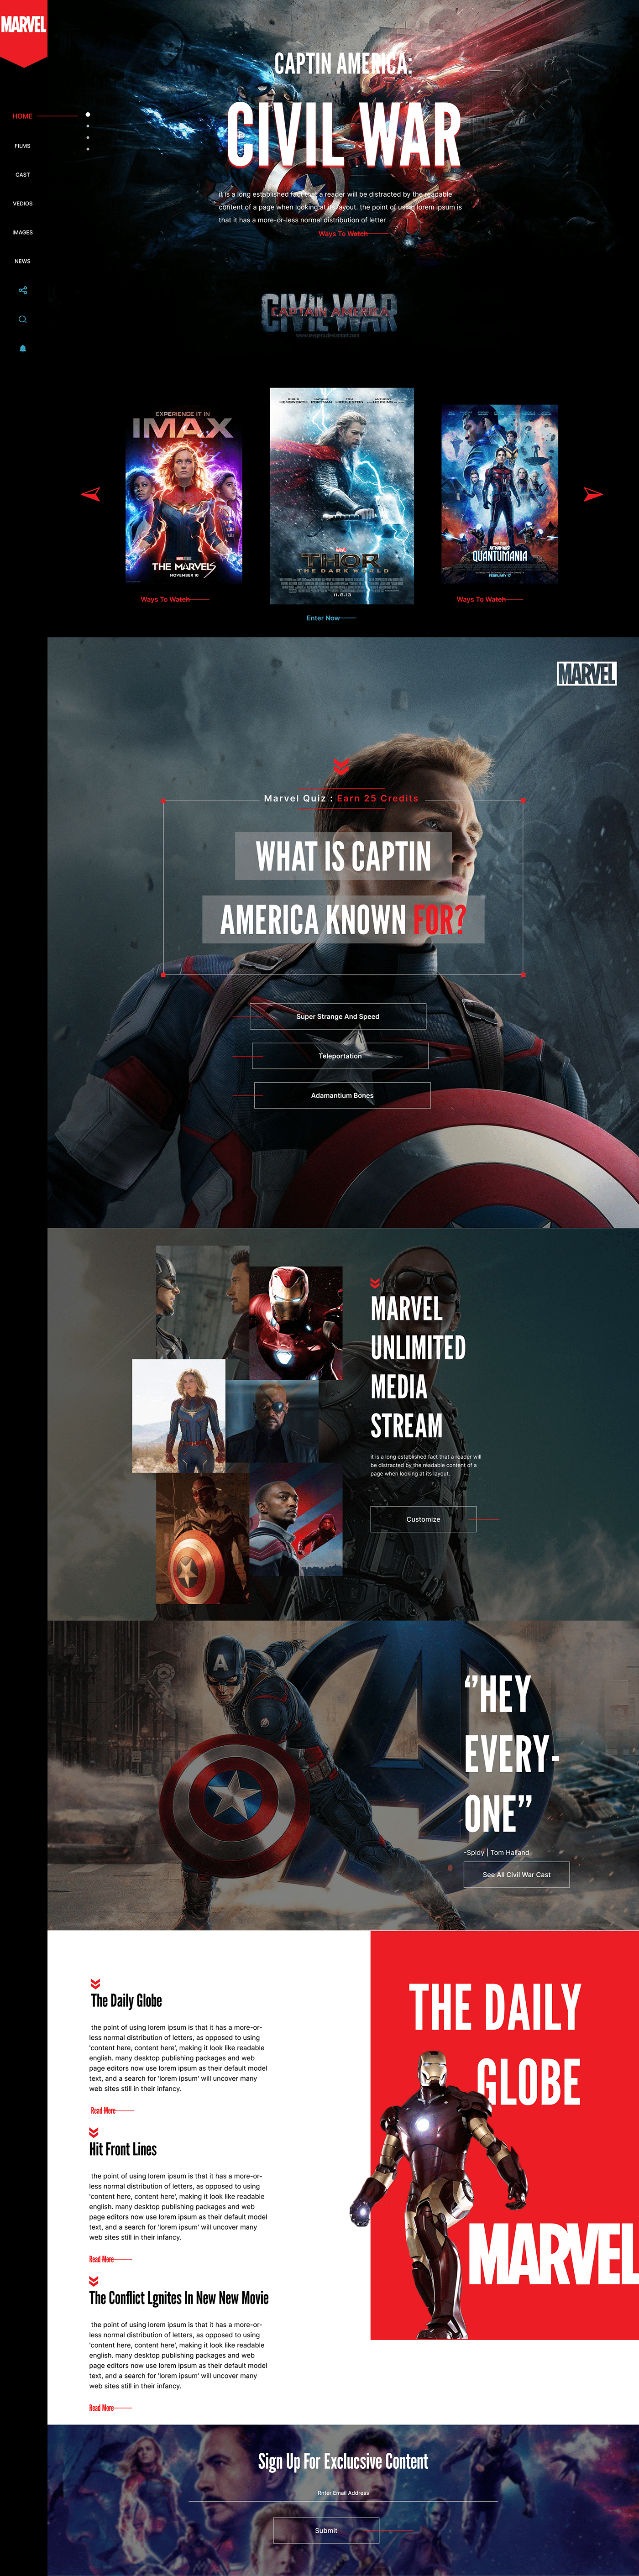 movies website design free download marvel comics Character design  captin america iron man Avengers SuperHero Hero